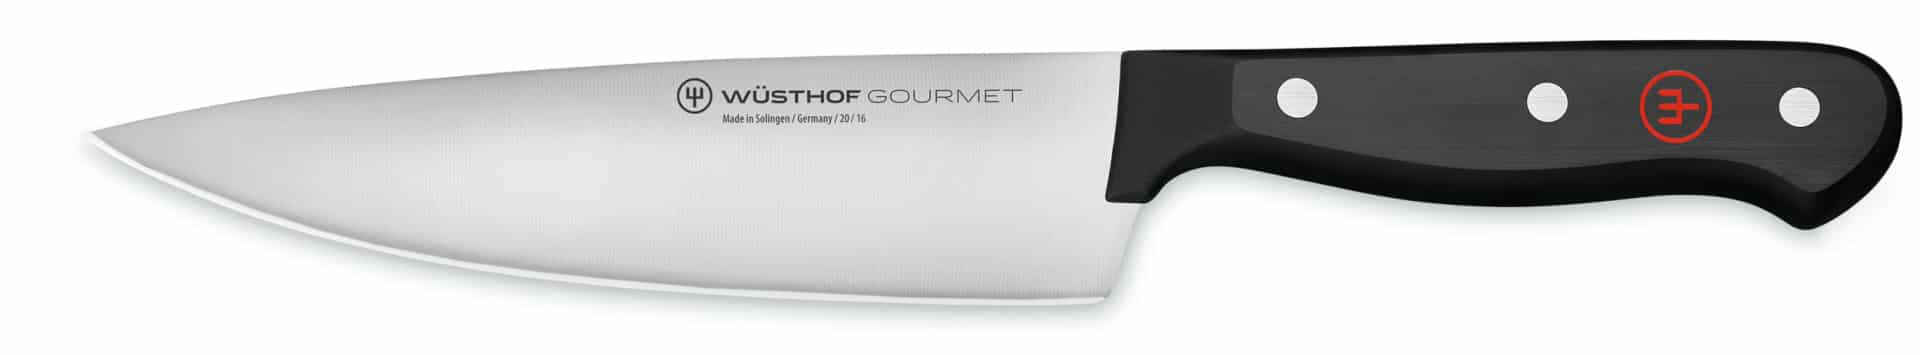 Wusthof Gourmet Cook's Knife 16cm